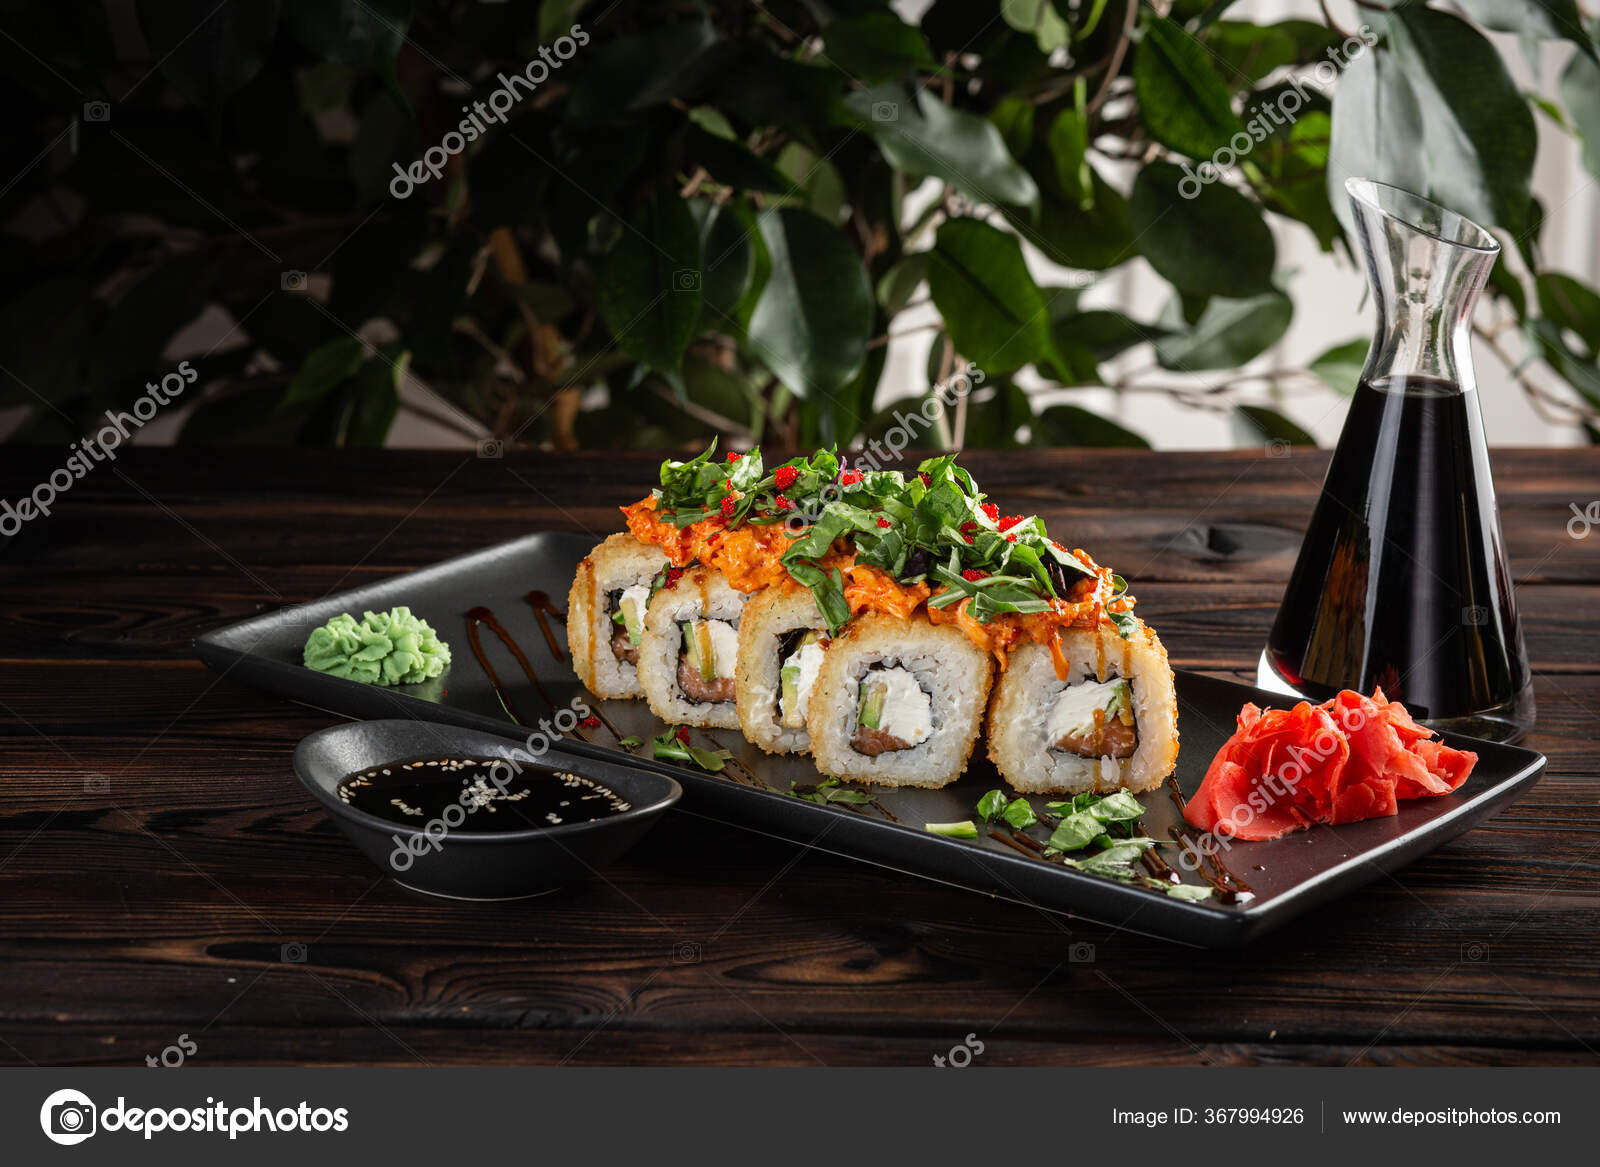 https://st3.depositphotos.com/20528882/36799/i/1600/depositphotos_367994926-stock-photo-sushi-roll-set-plate-soy.jpg